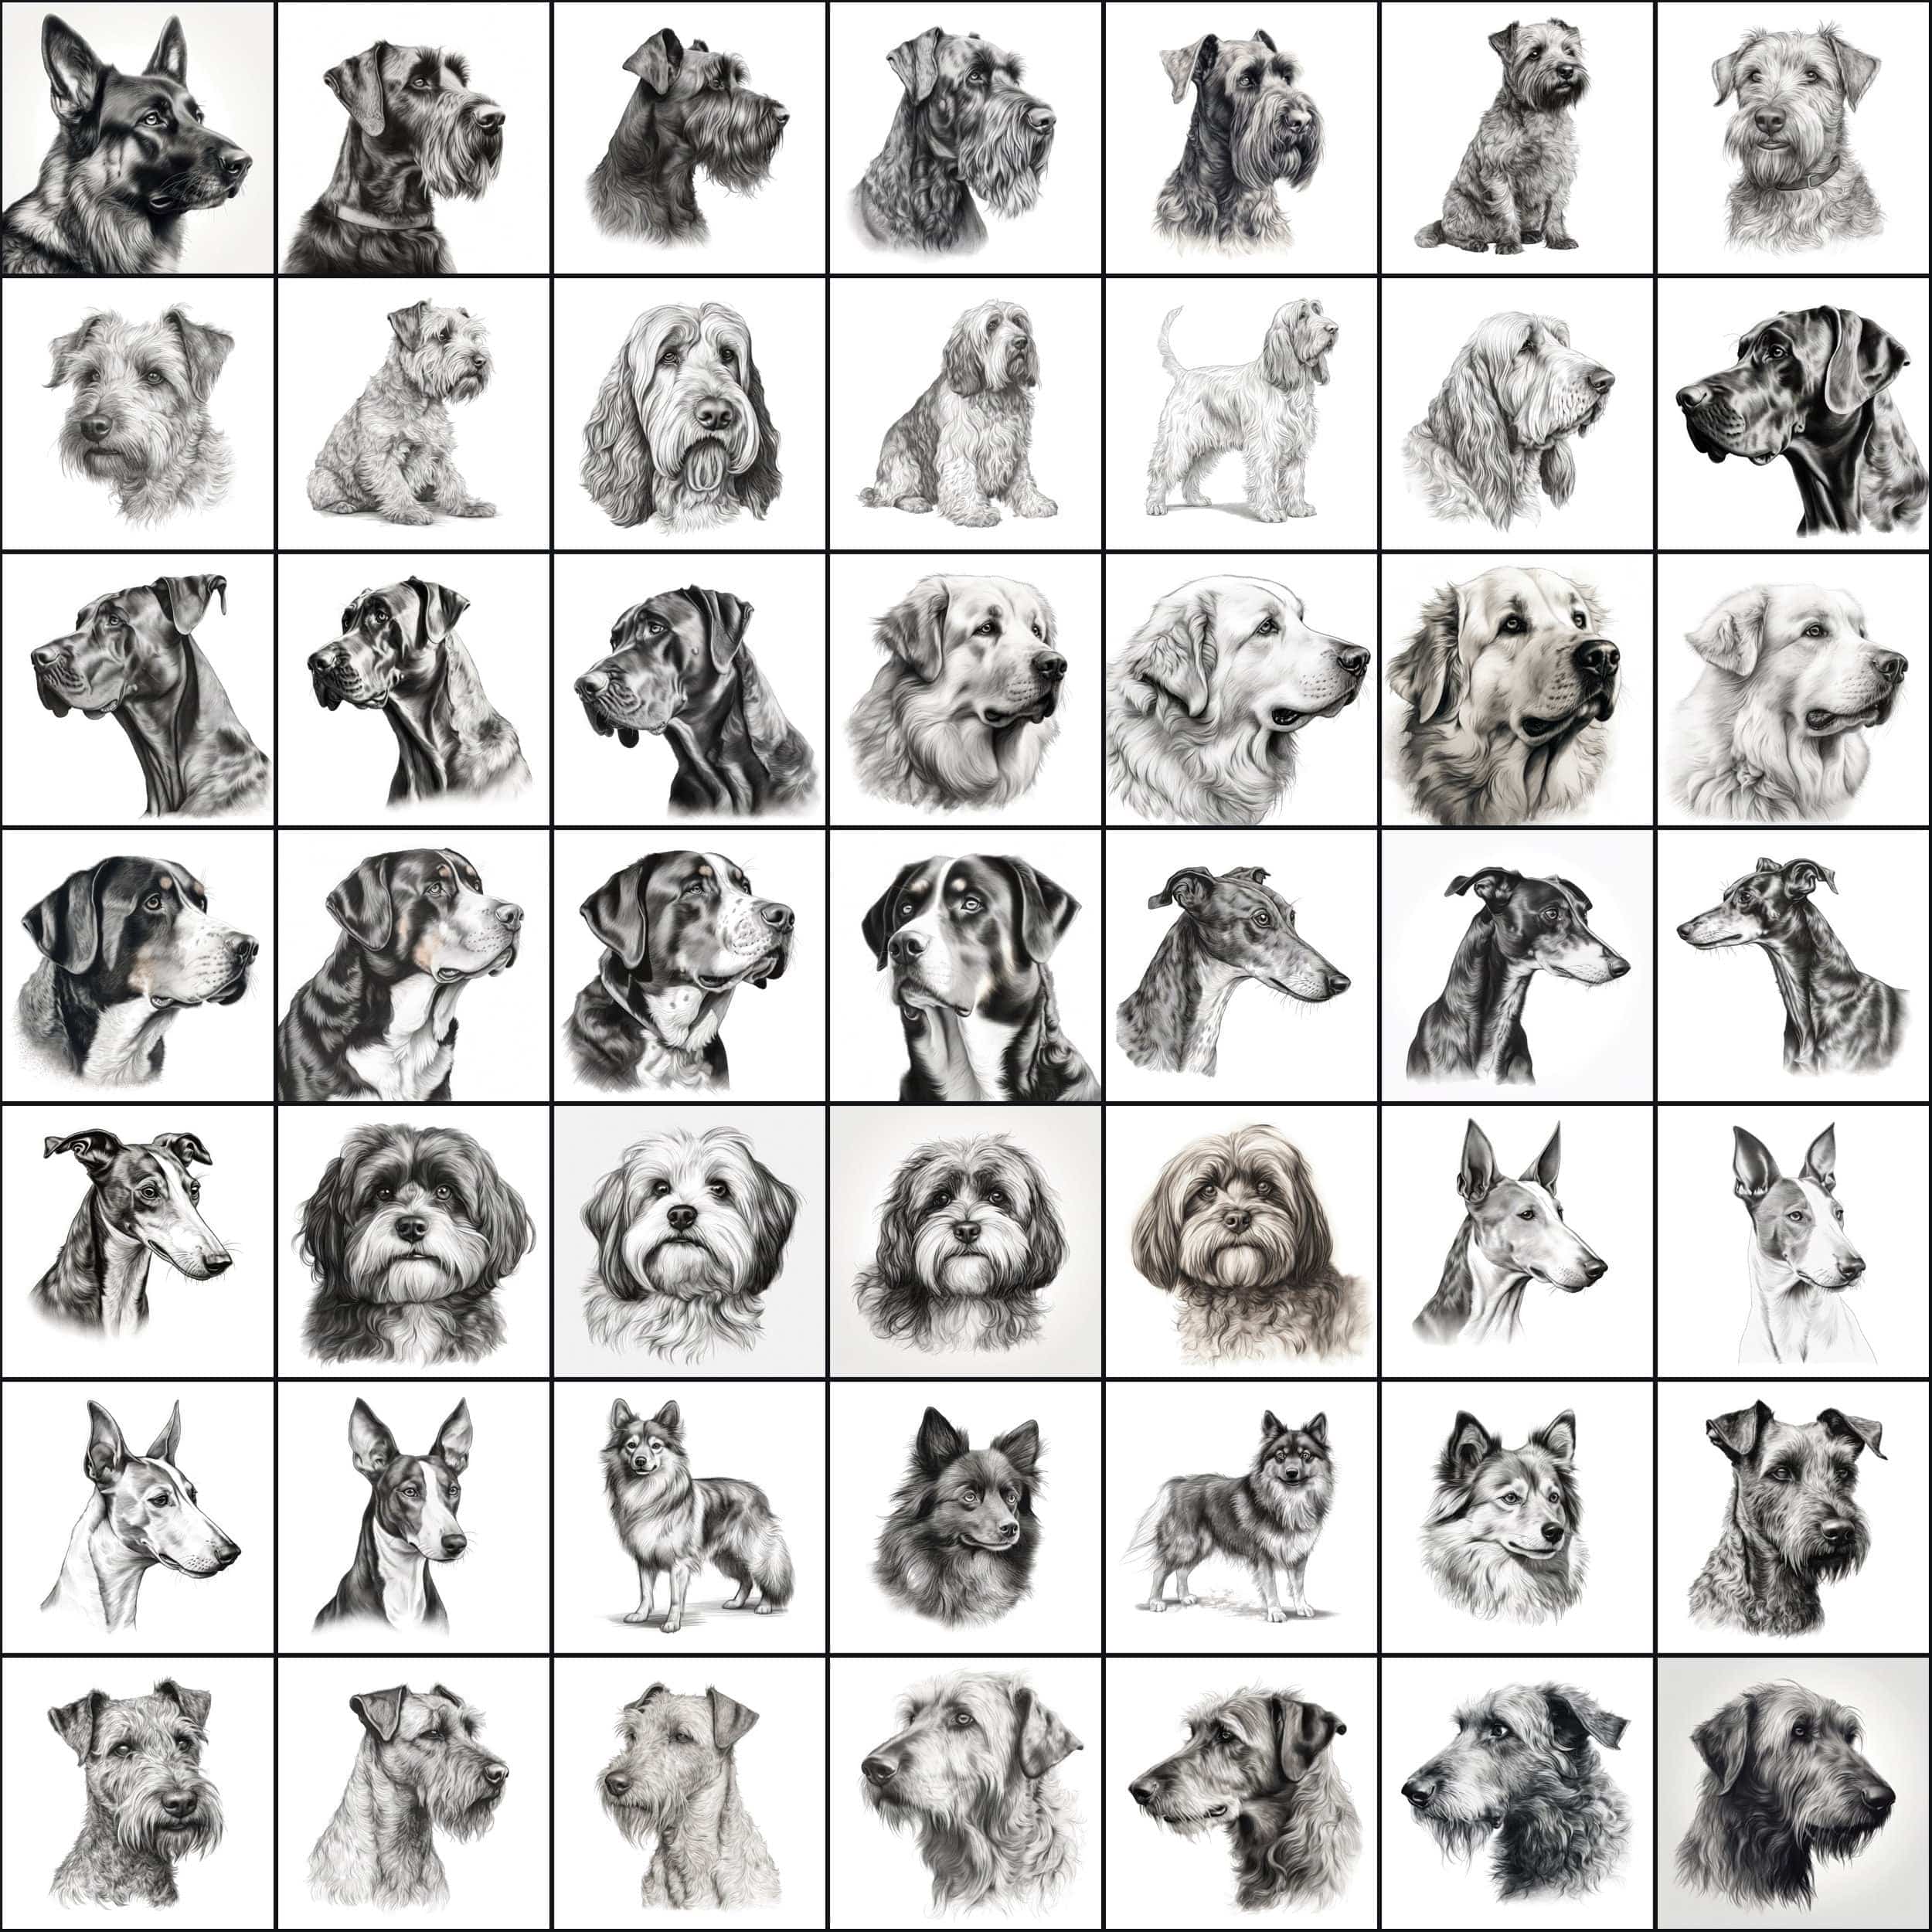 770 Sketch Dog Breed PNGs, Black & White Dog Images, High-Resolution Commercial Use Graphics Digital Download Sumobundle